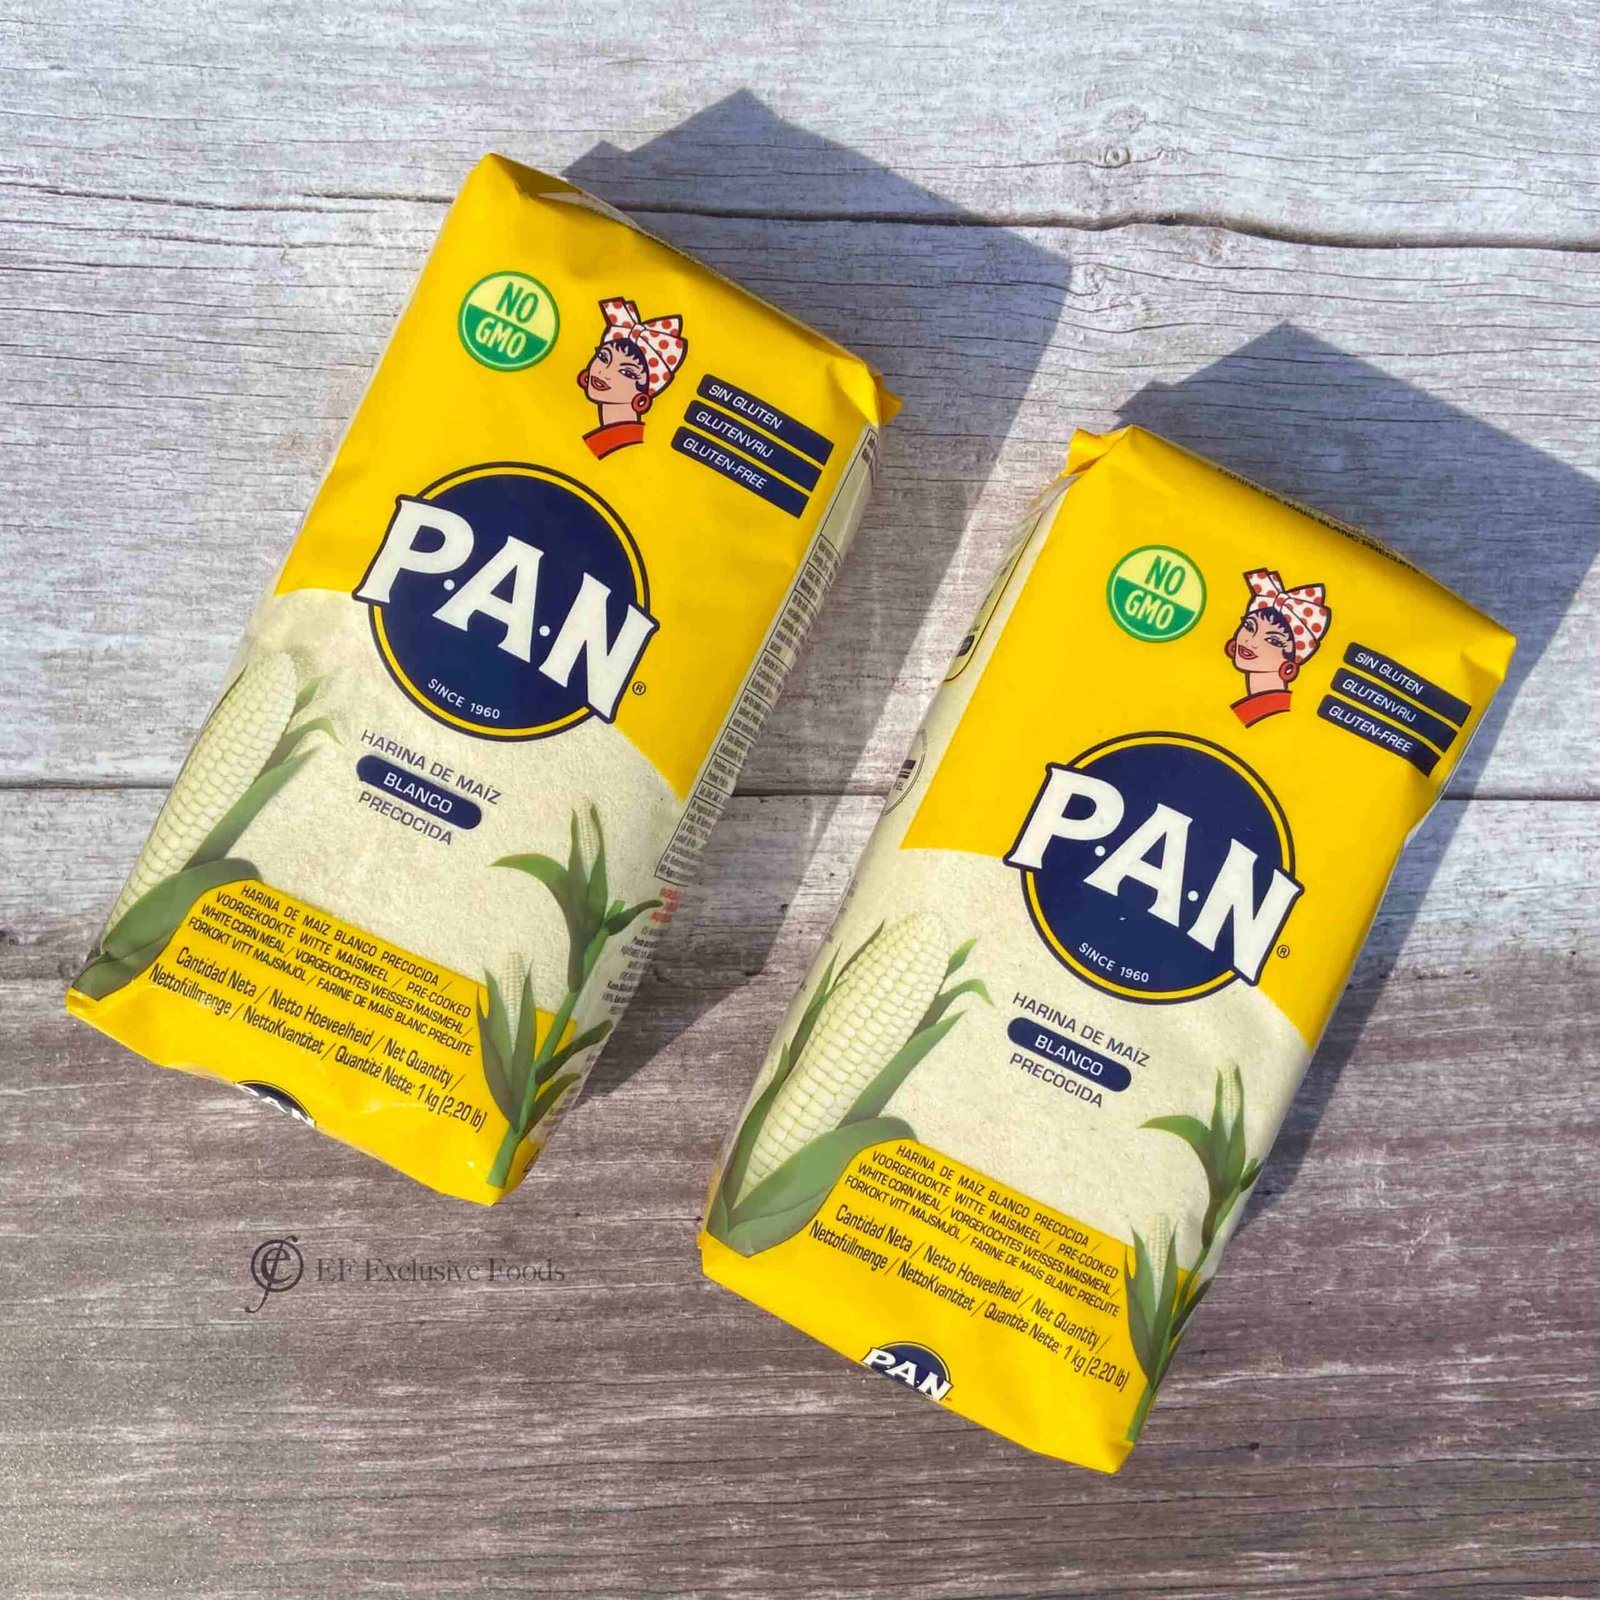 1 UK Exclusive Pan - kg Foods Harina